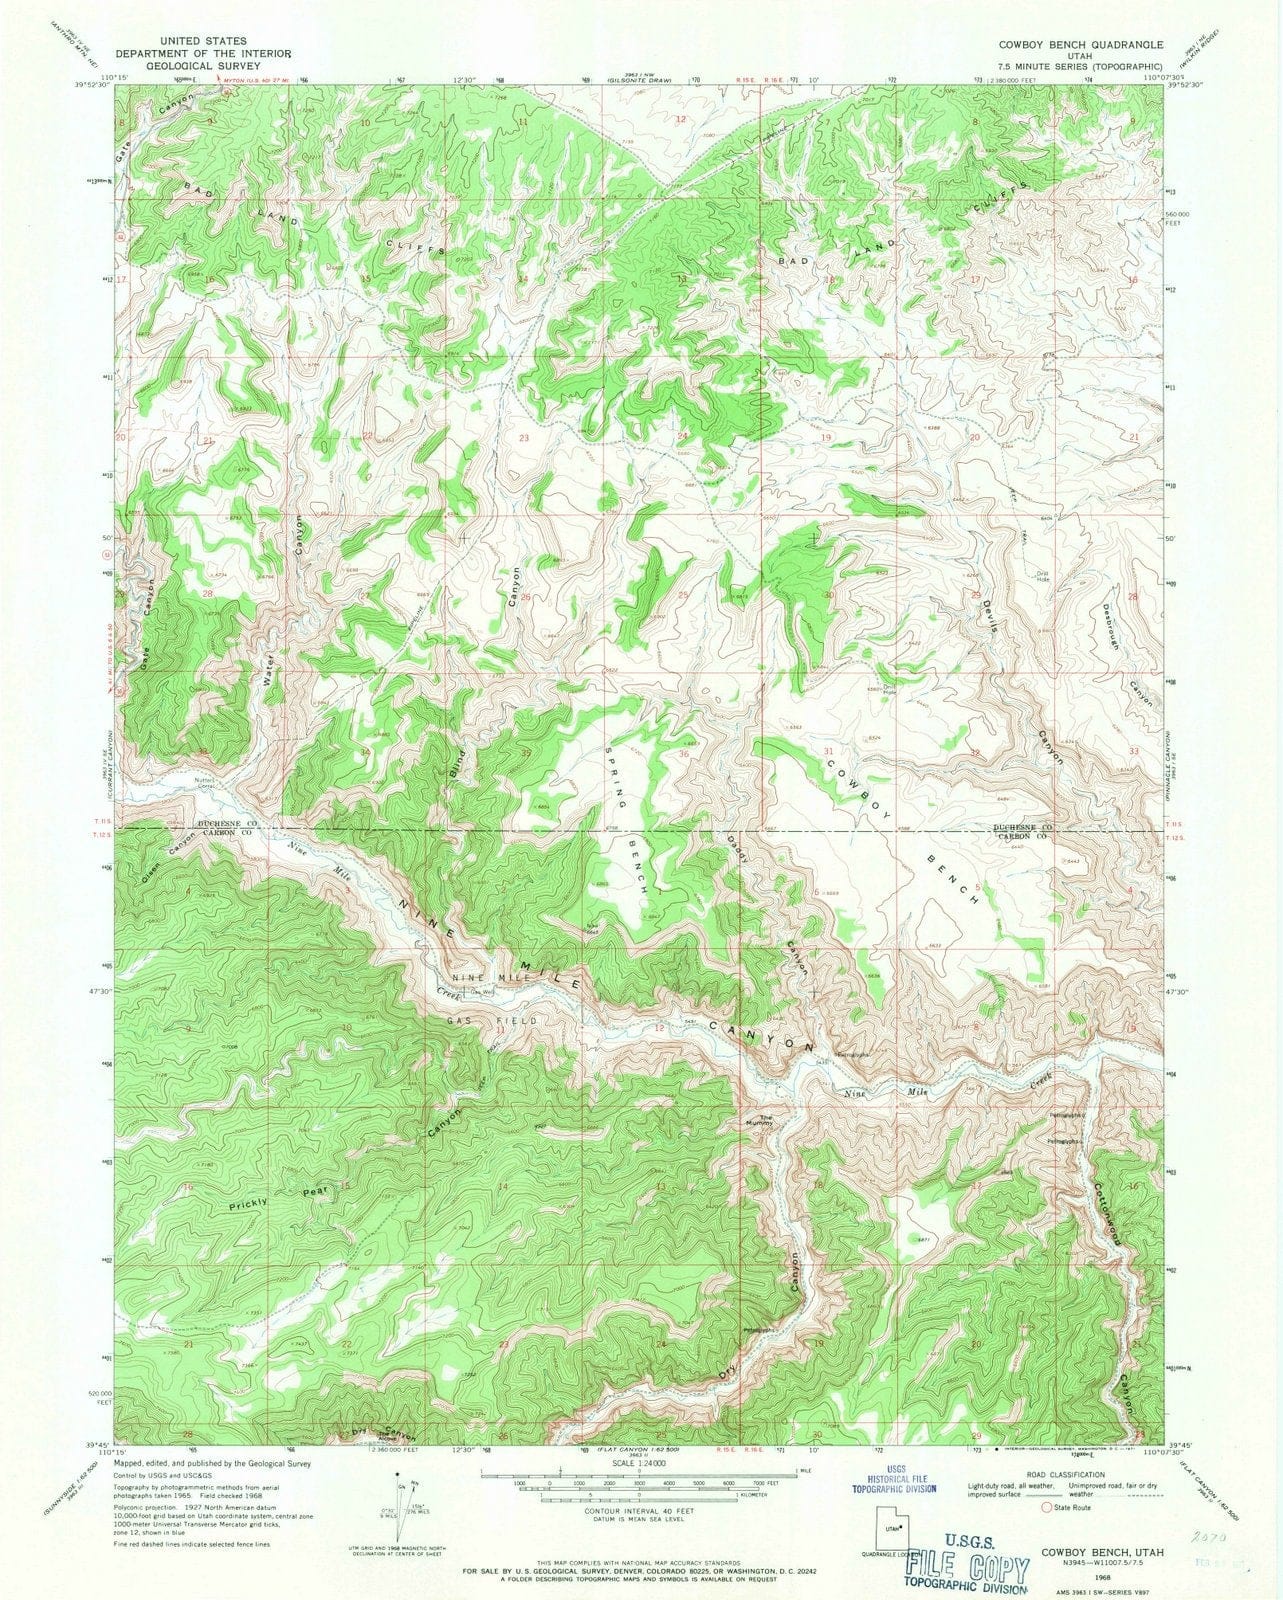 1968 Cowboy Bench, UT - Utah - USGS Topographic Map